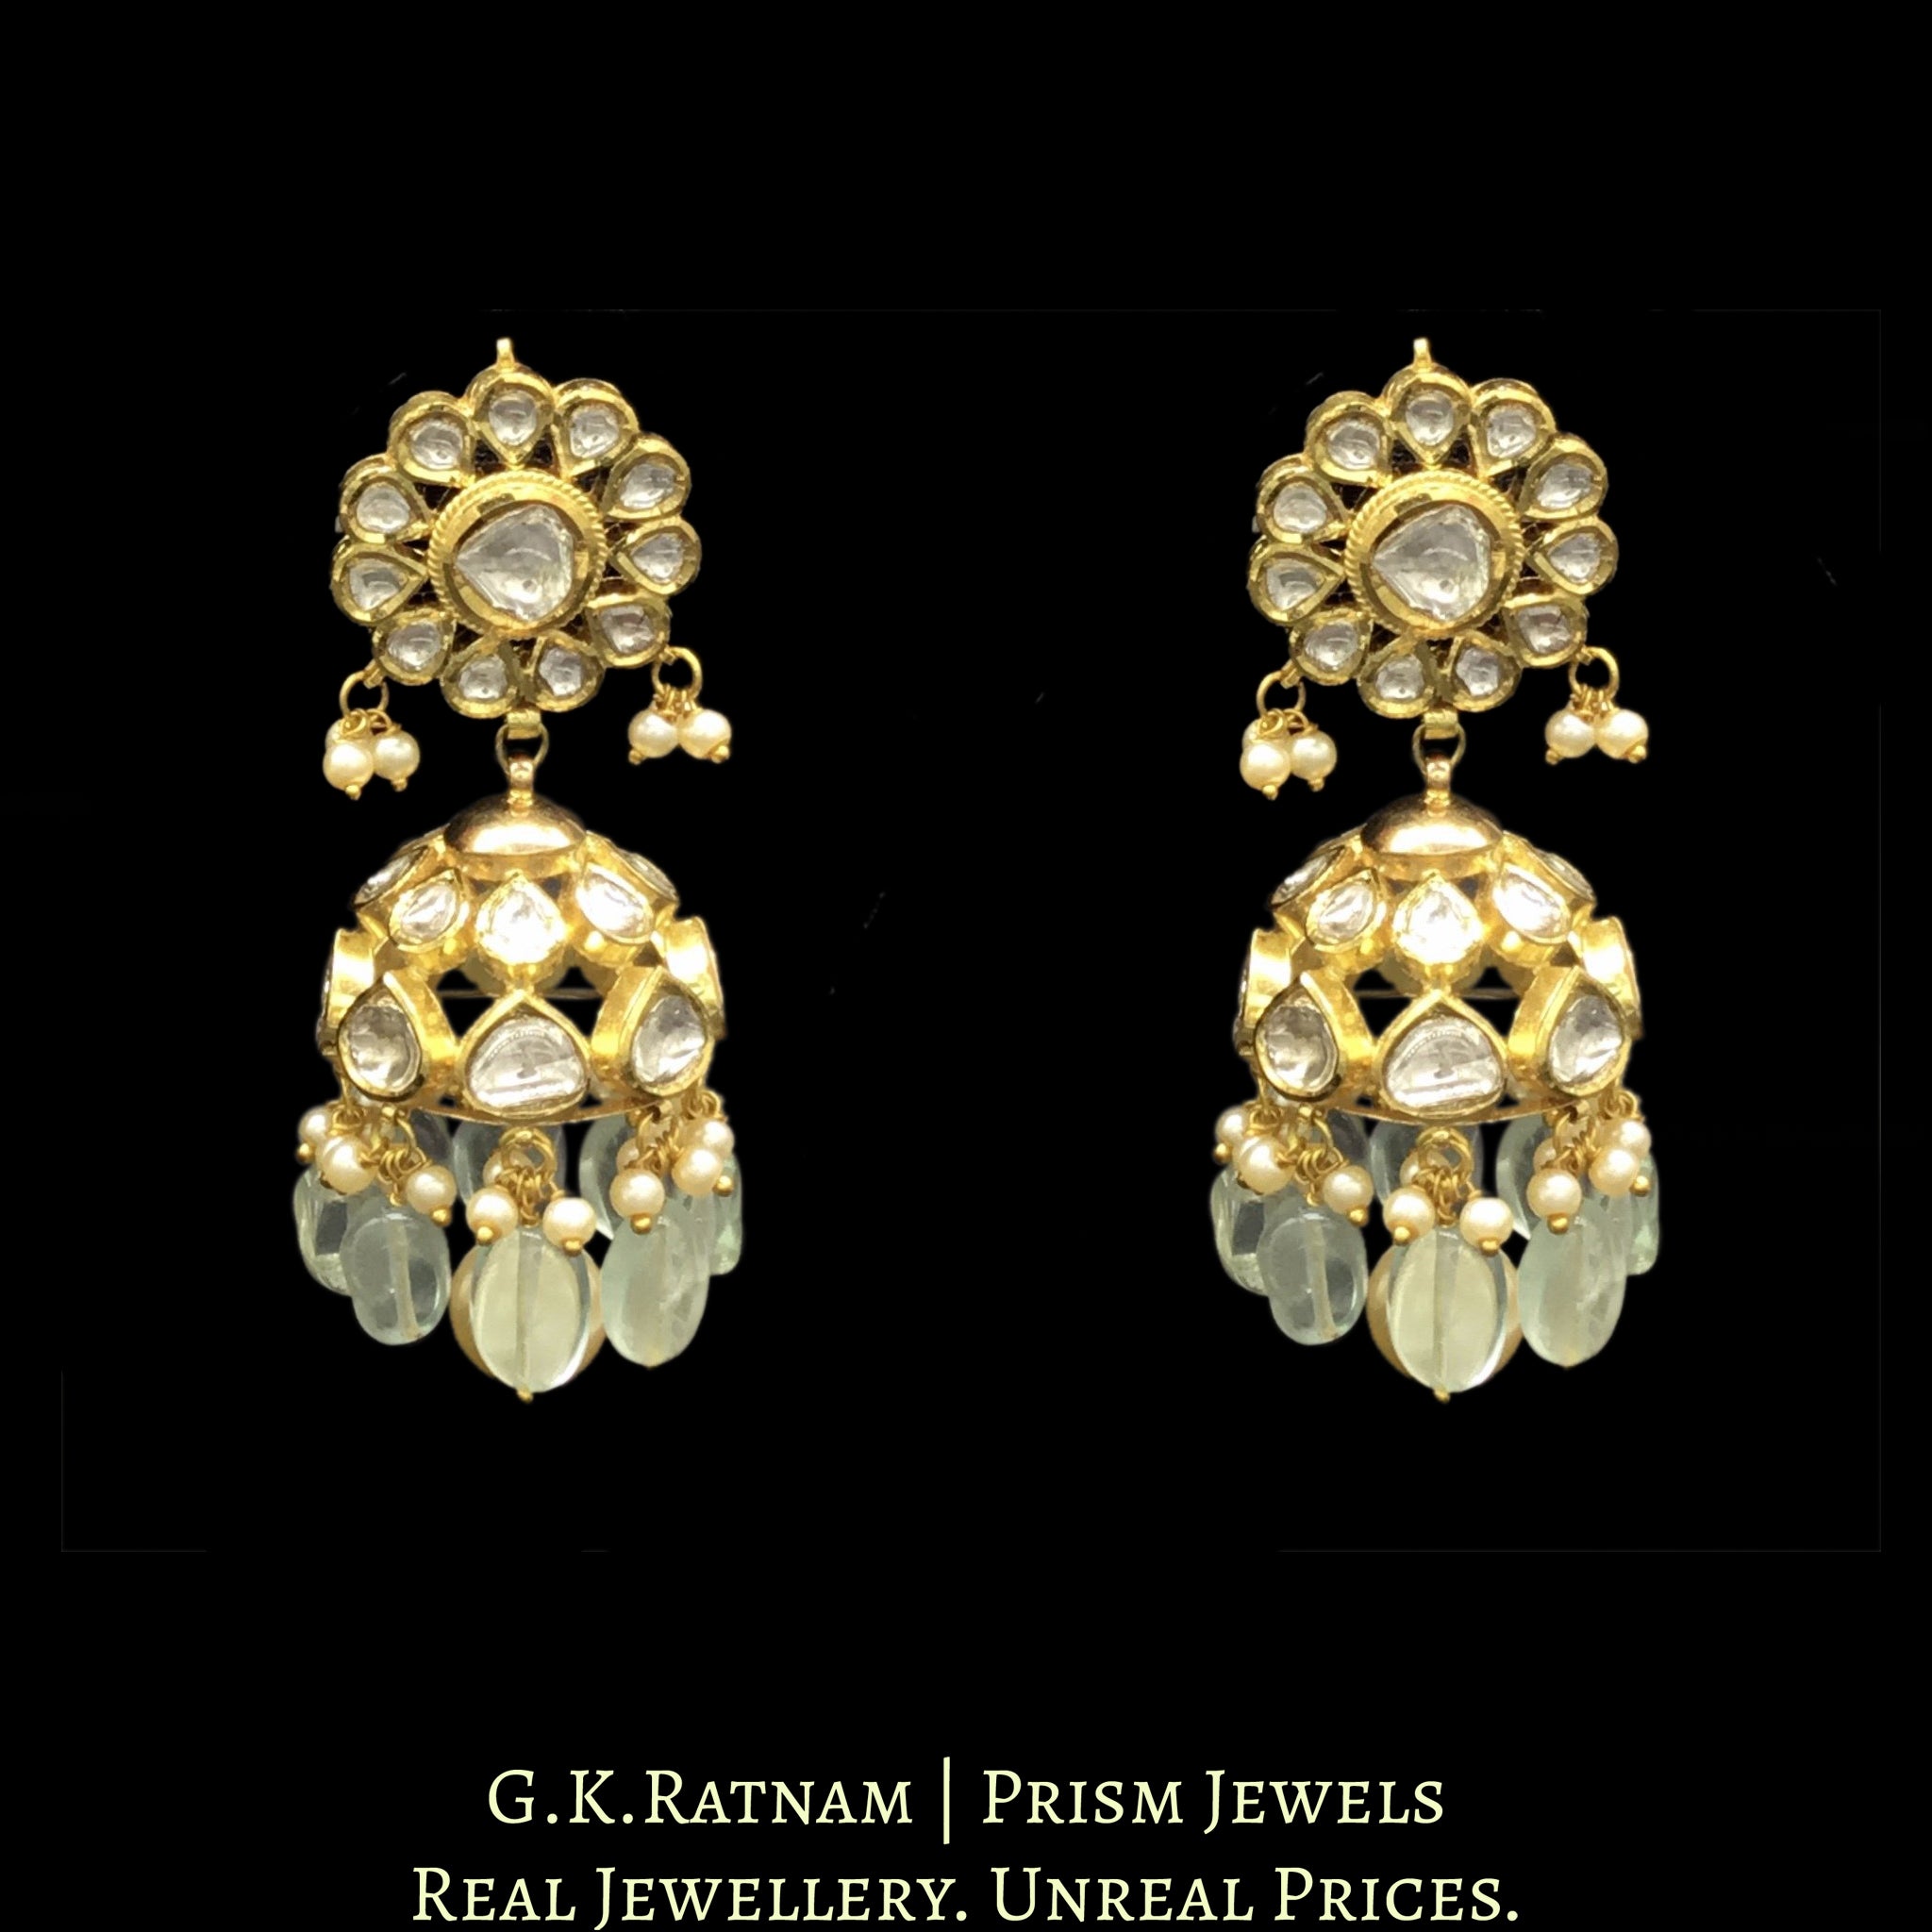 18k Gold and Diamond Polki Choker Necklace Set enhanced with russian-emerald-grade fluorites